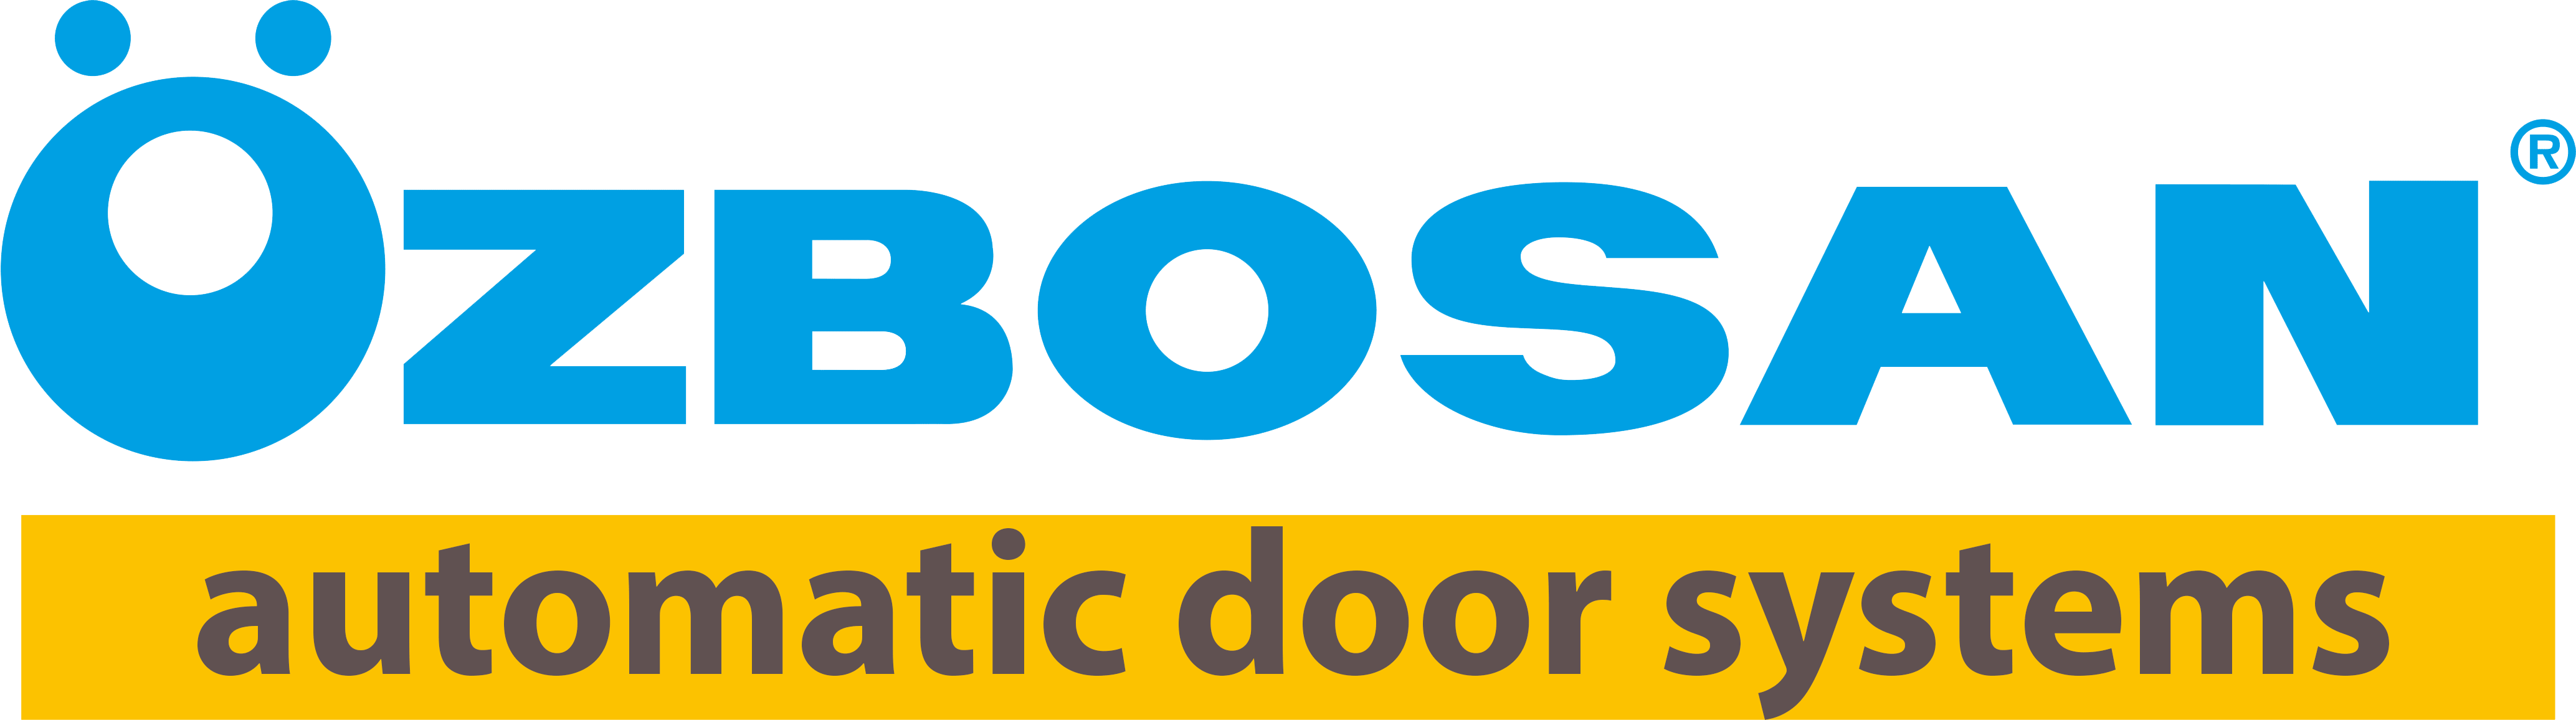 Ozbosan Automatic Door Systems